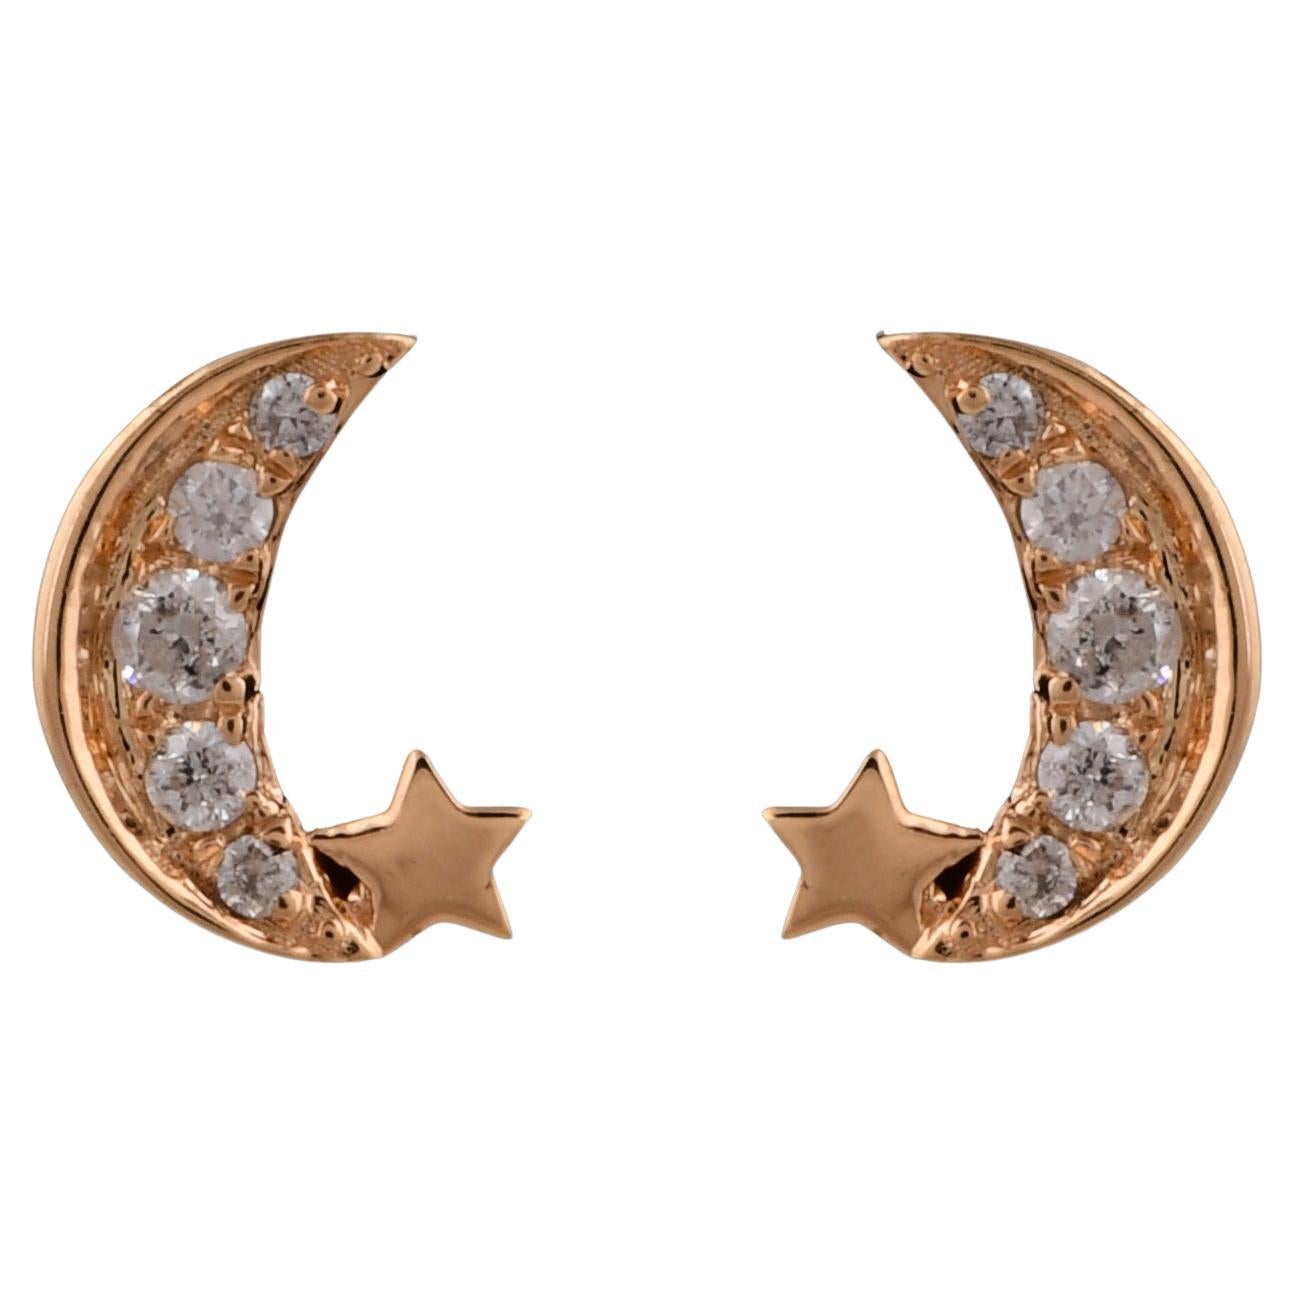 Natural 0.13 Carat Diamond Star Moon Stud Earrings 18 Karat Yellow Gold Jewelry